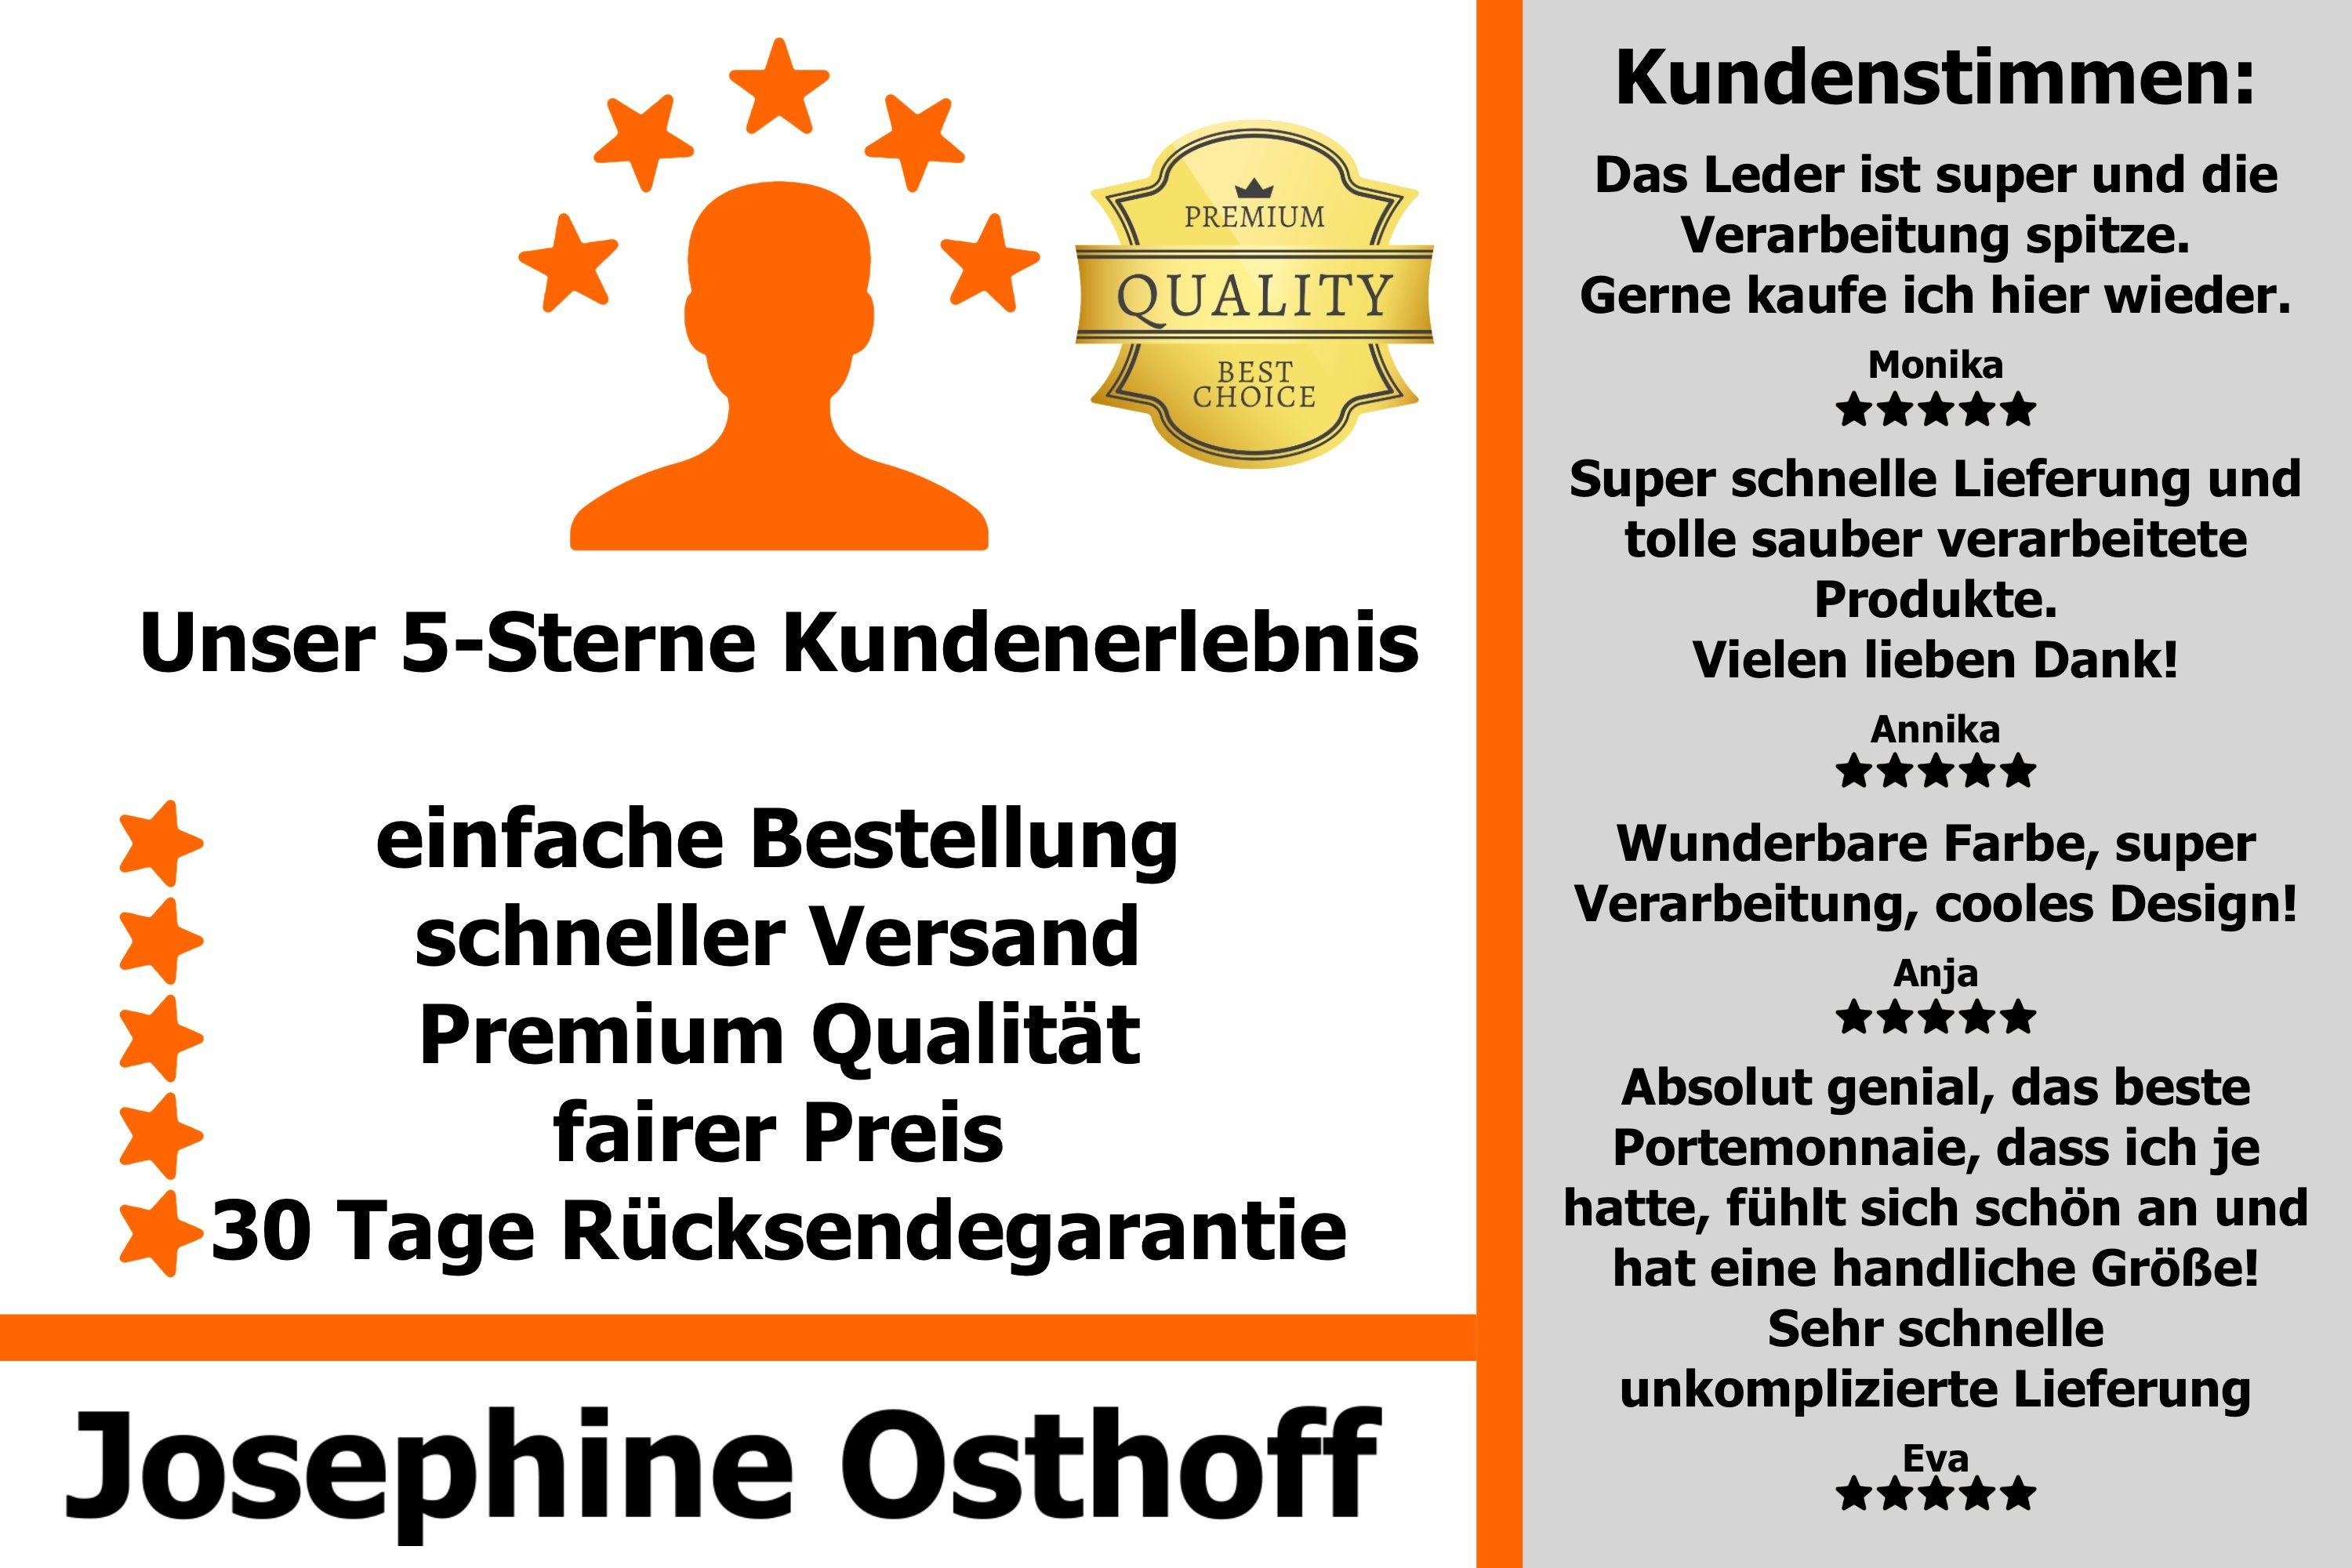 Osthoff Schulterriemen cm Schulterriemen schwarz/gold Josephine 2